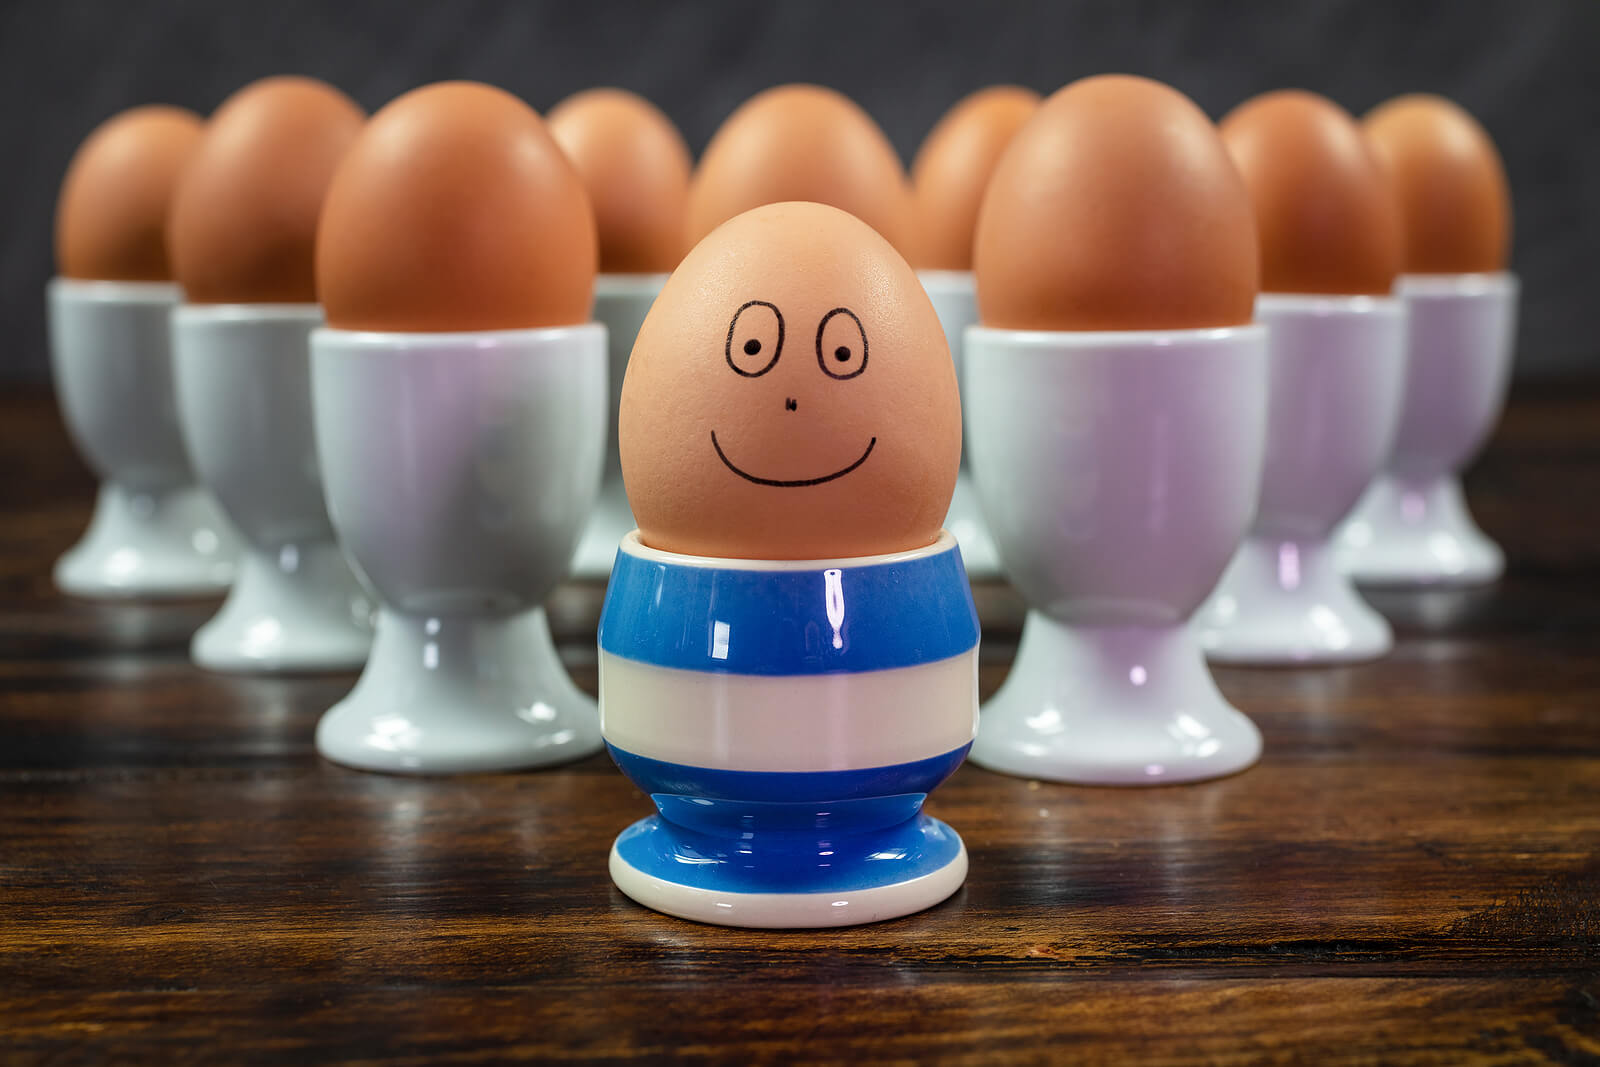 Eggs contain melatonin.